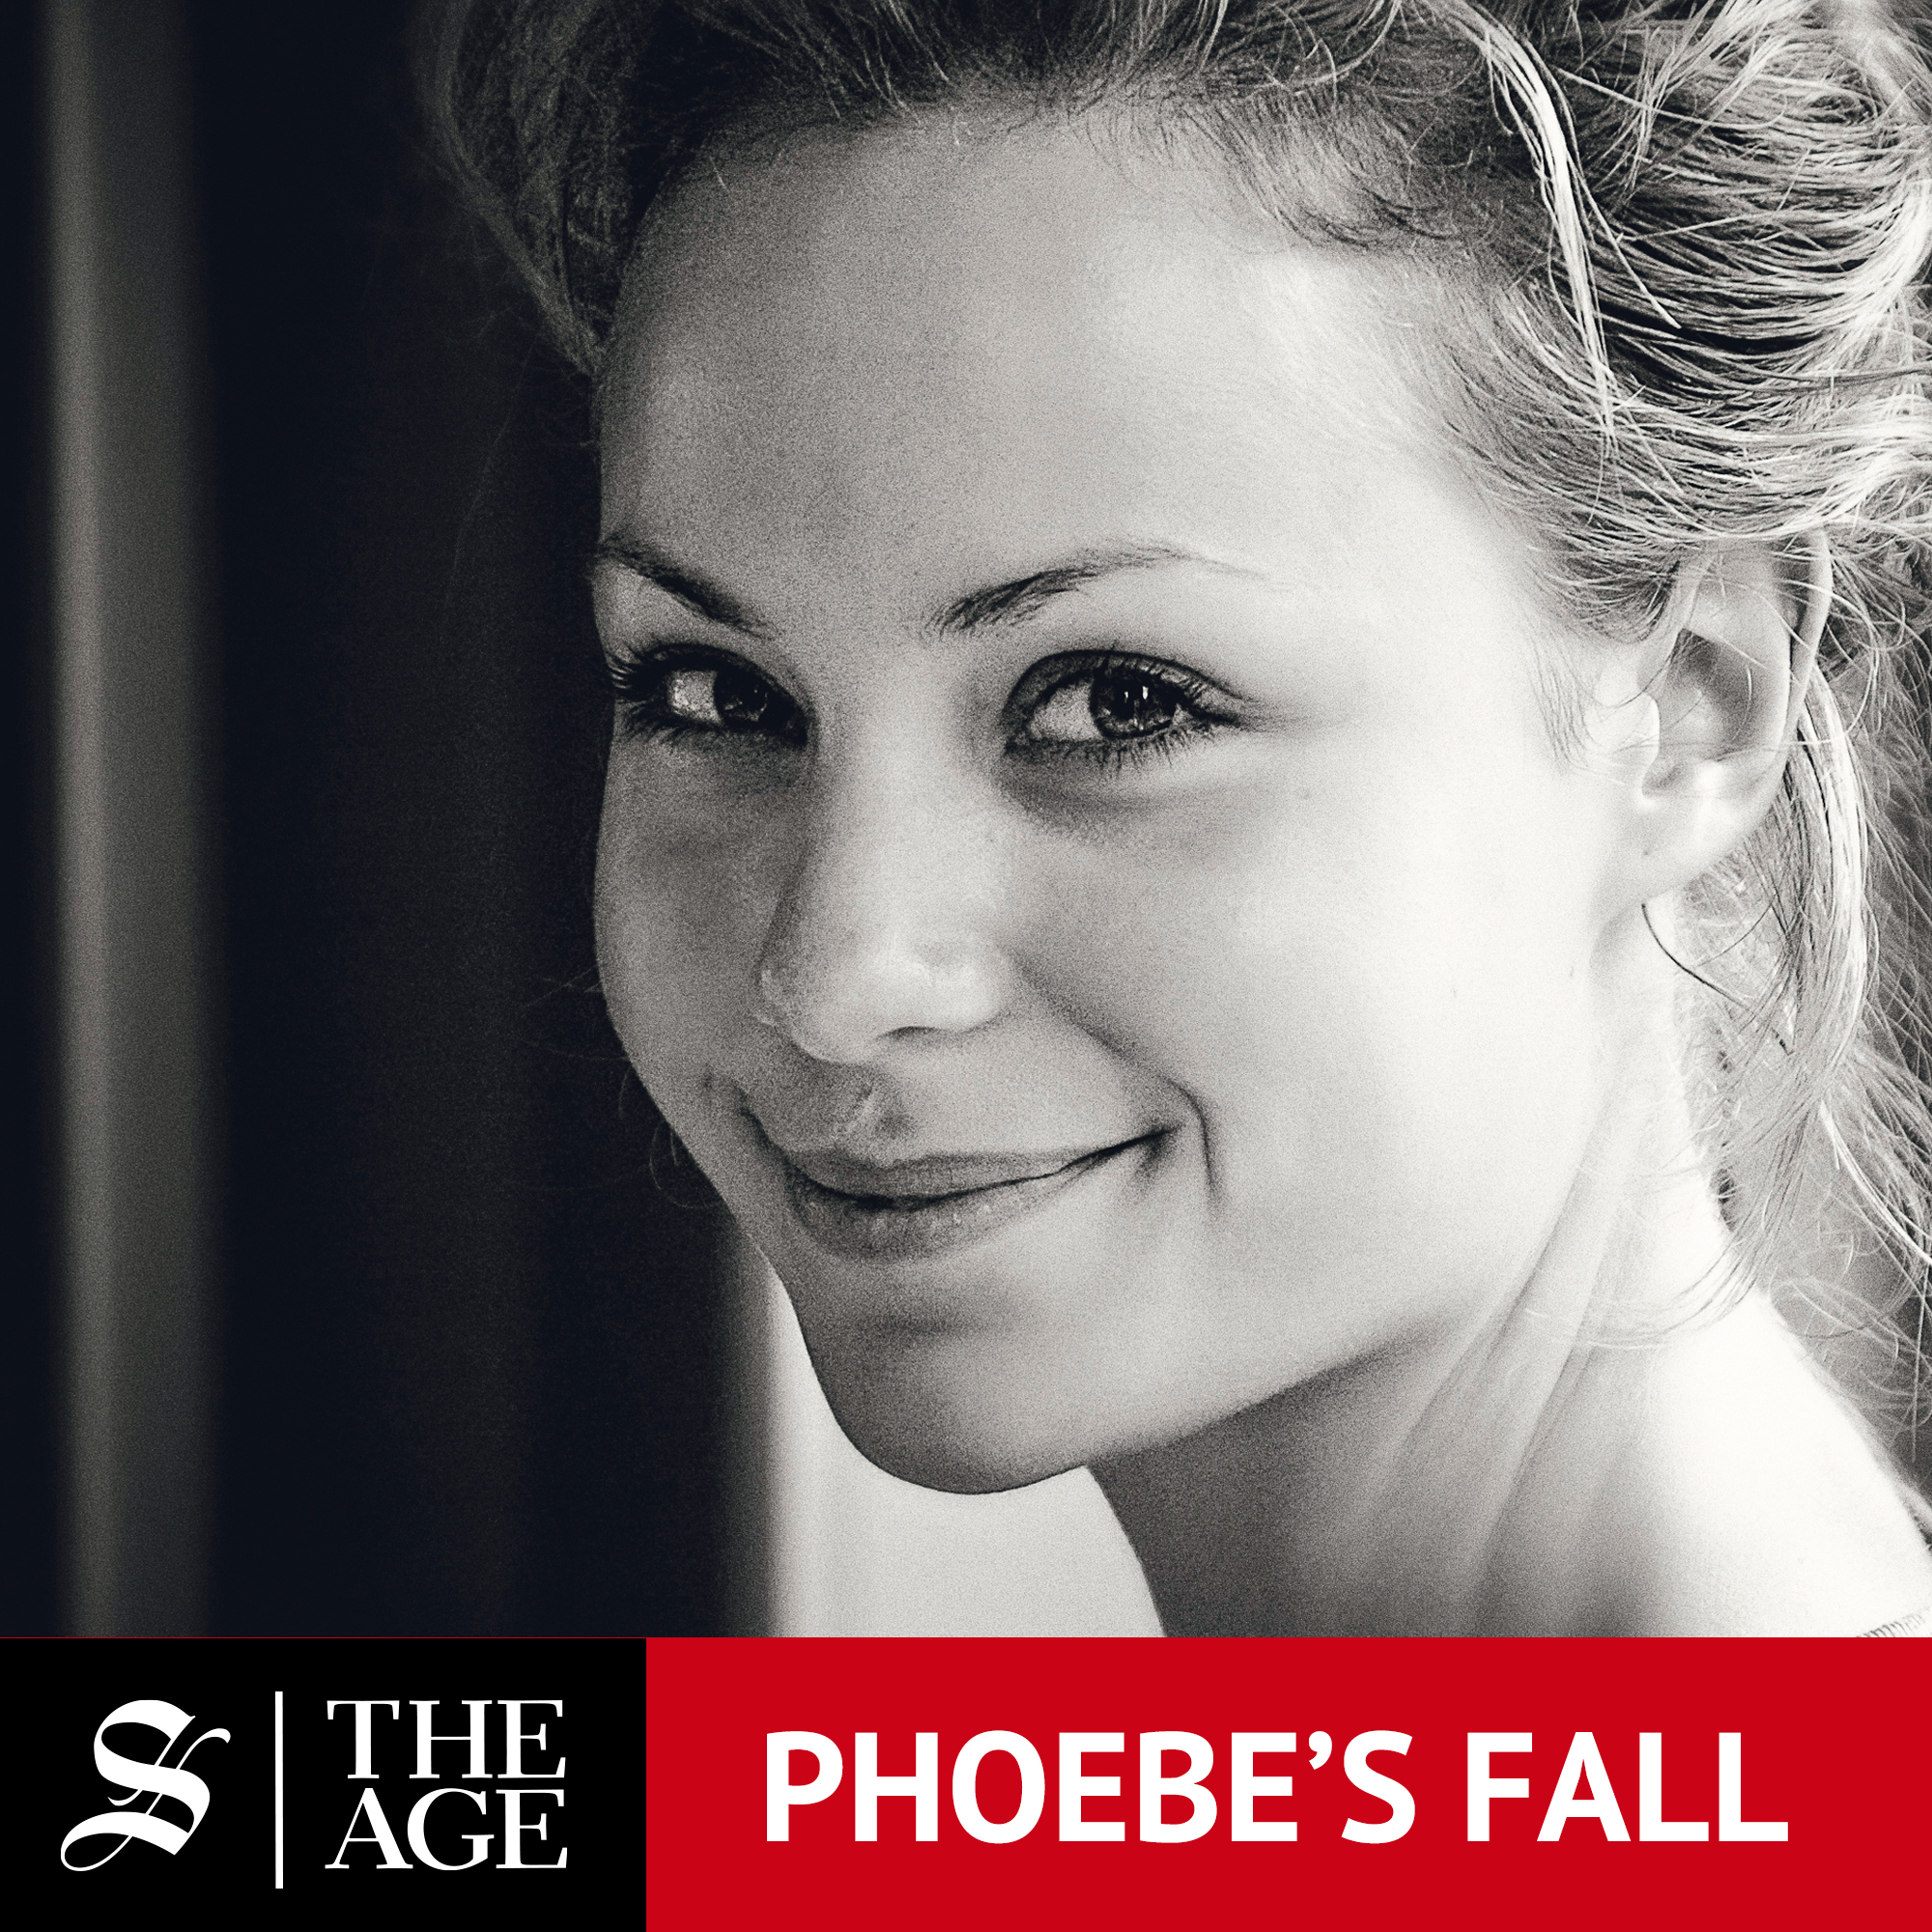 Phoebe's Fall - A Fresh Look